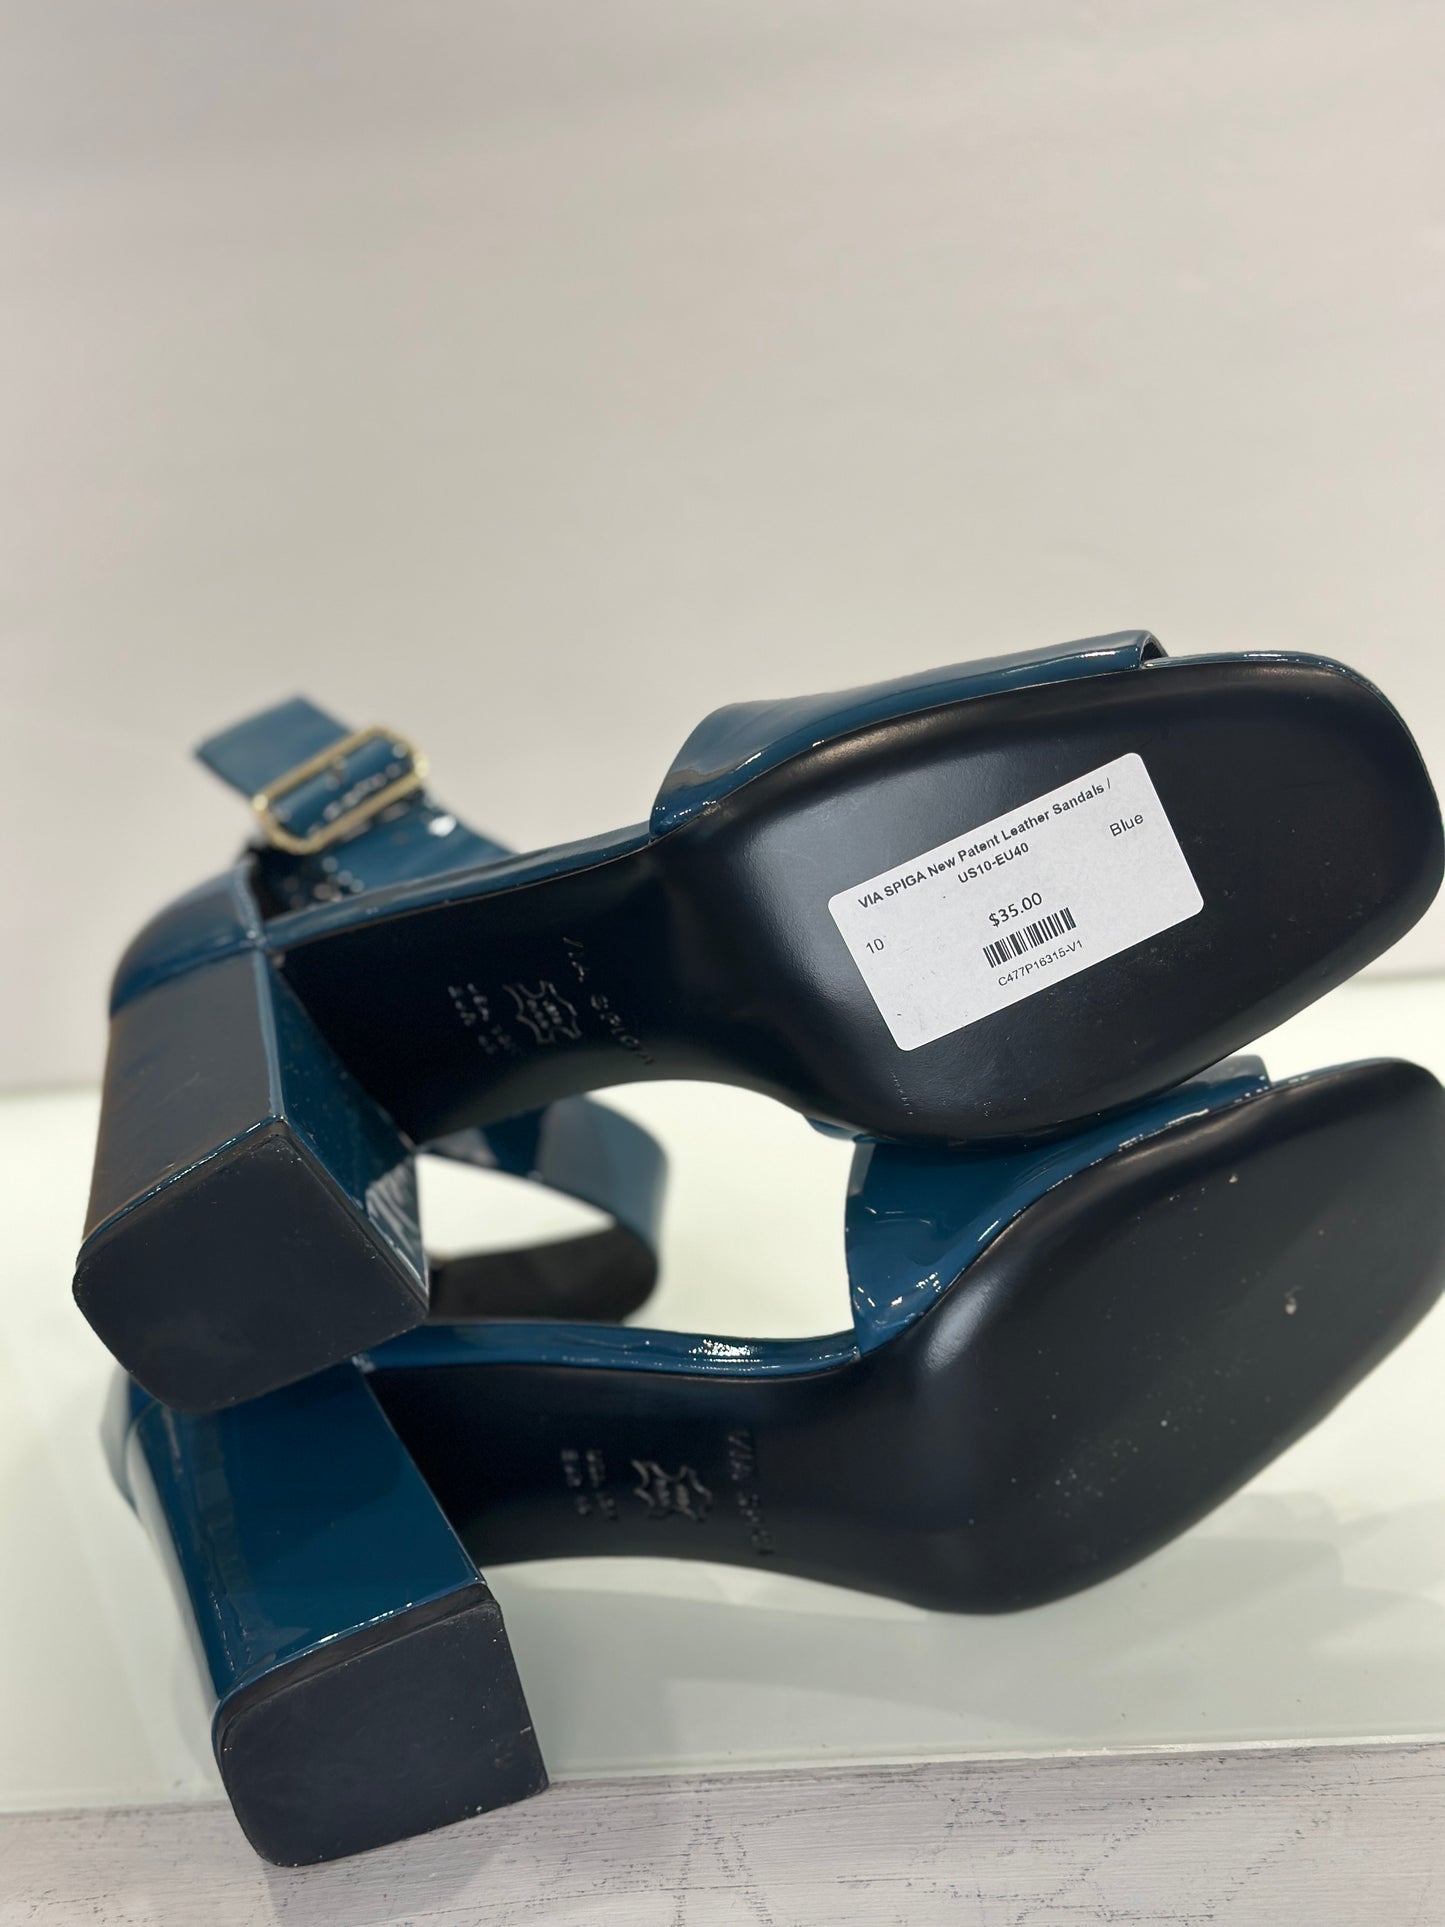 VIA SPIGA New Patent Leather Sandals / US10-EU40